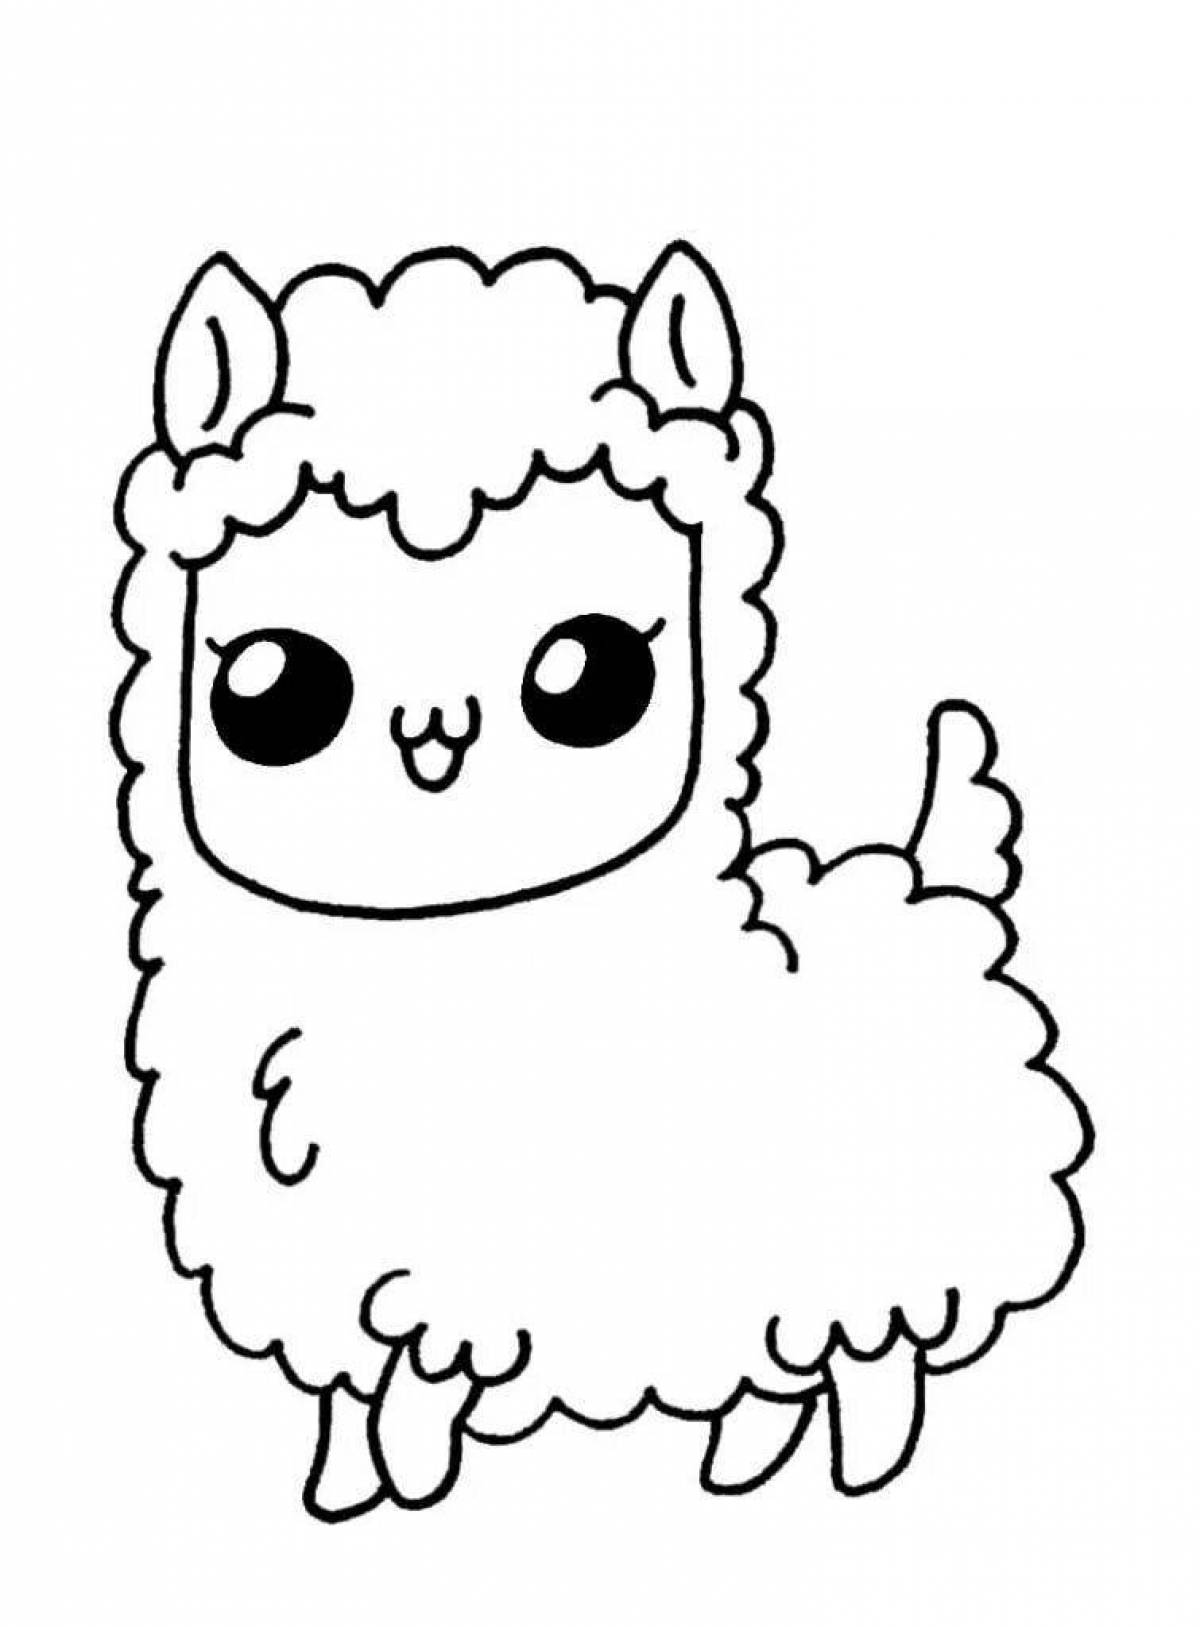 Coloring book sparkling cute llama